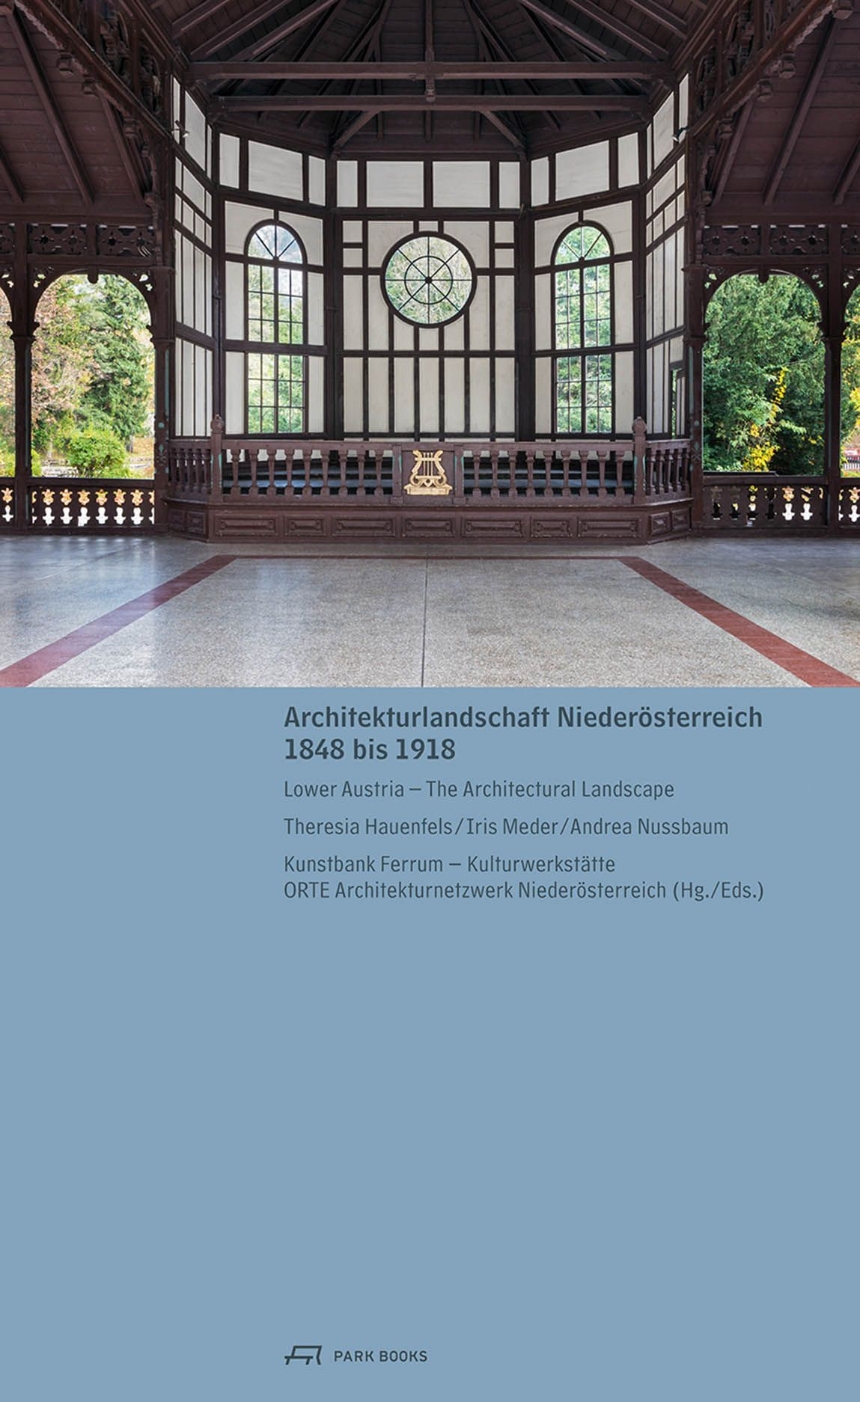 Lower Austria - The Architectural Landscape 1848 to 1918